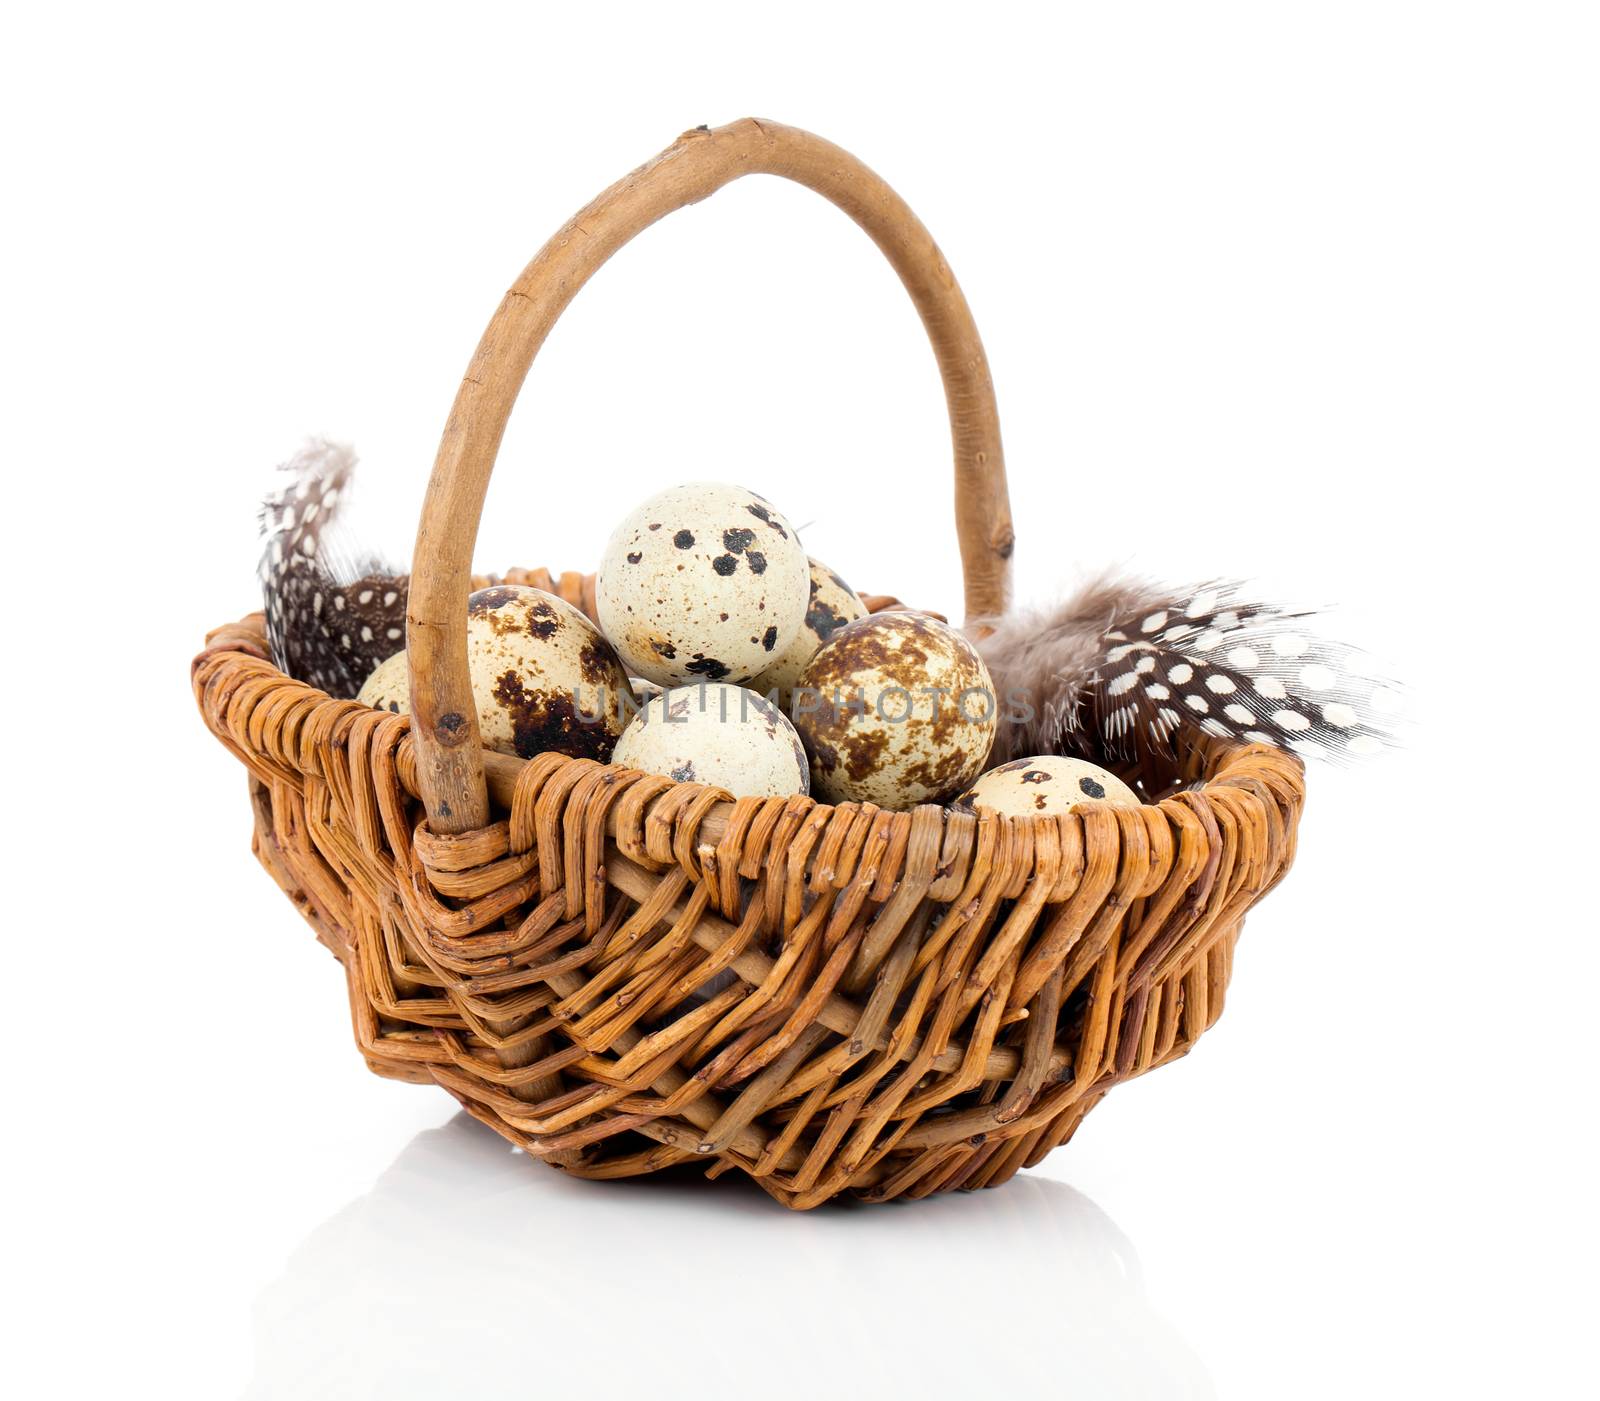 quail eggs in a wicker basket on white background by motorolka